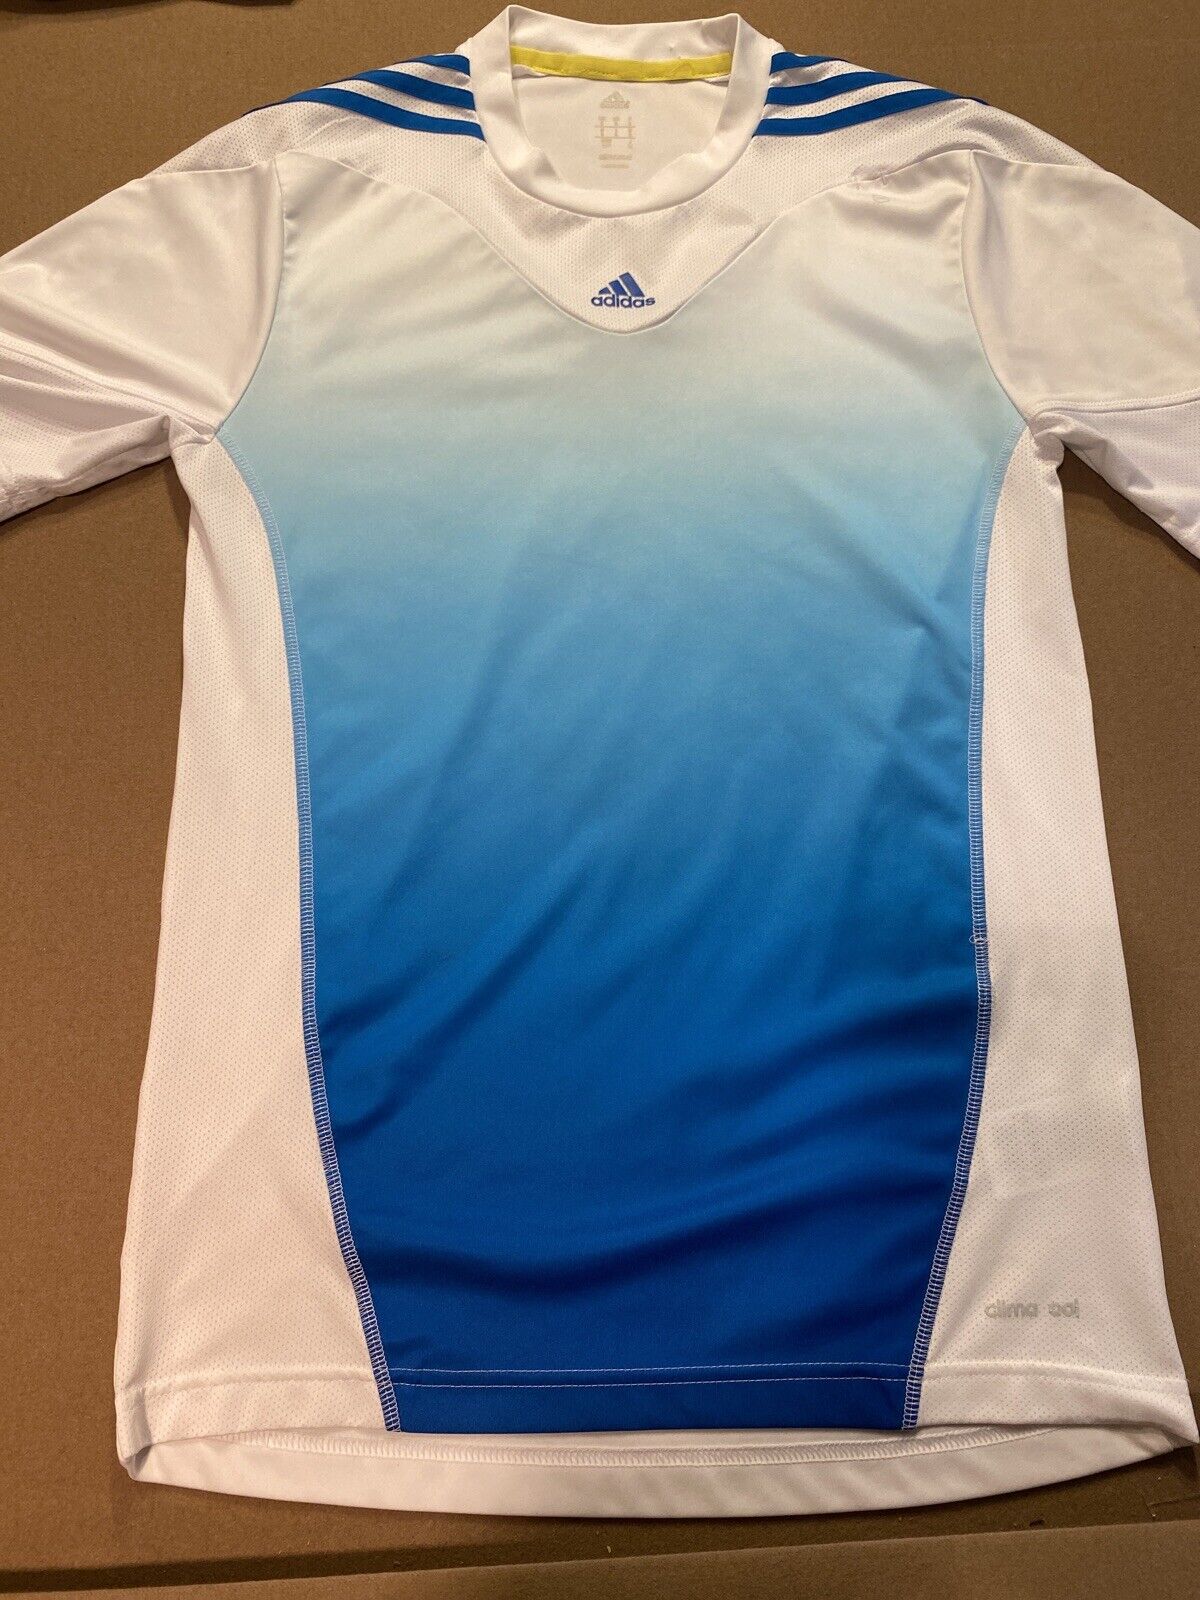 Adidas Predator ClimaCool Shirt Size Small Soccer Athletic Jersey eBay